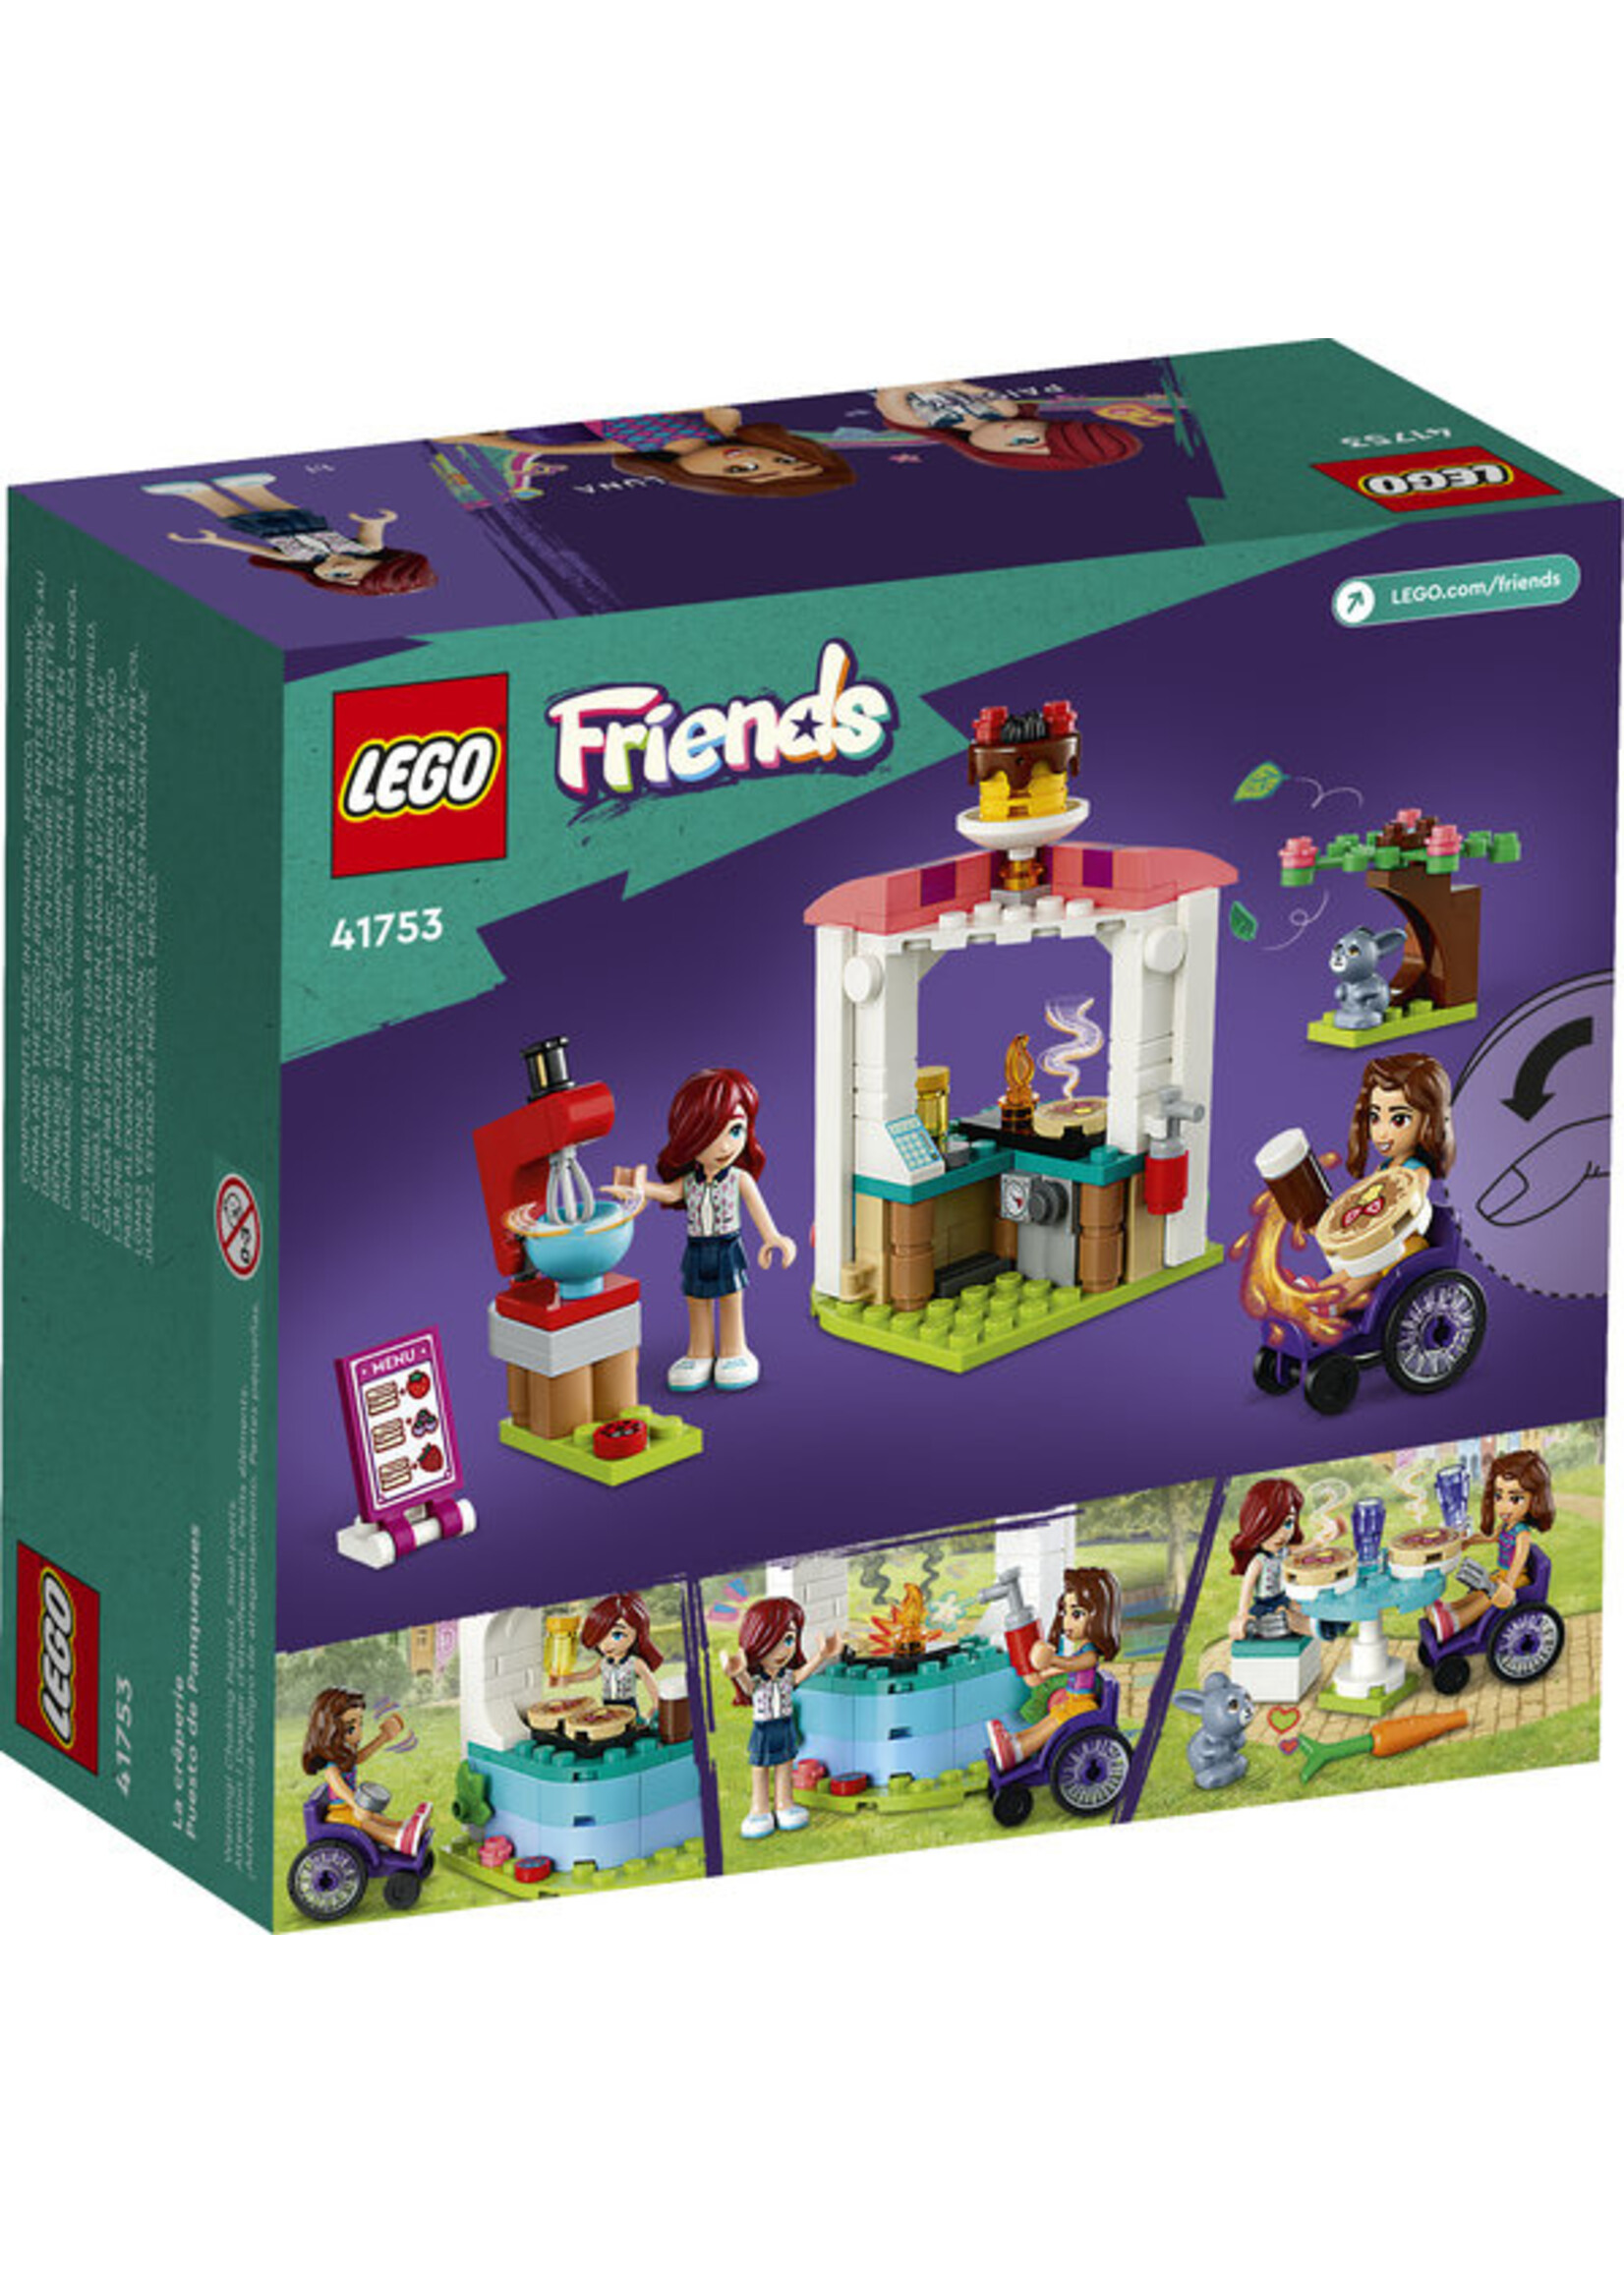 LEGO 41753 - Pancake Shop